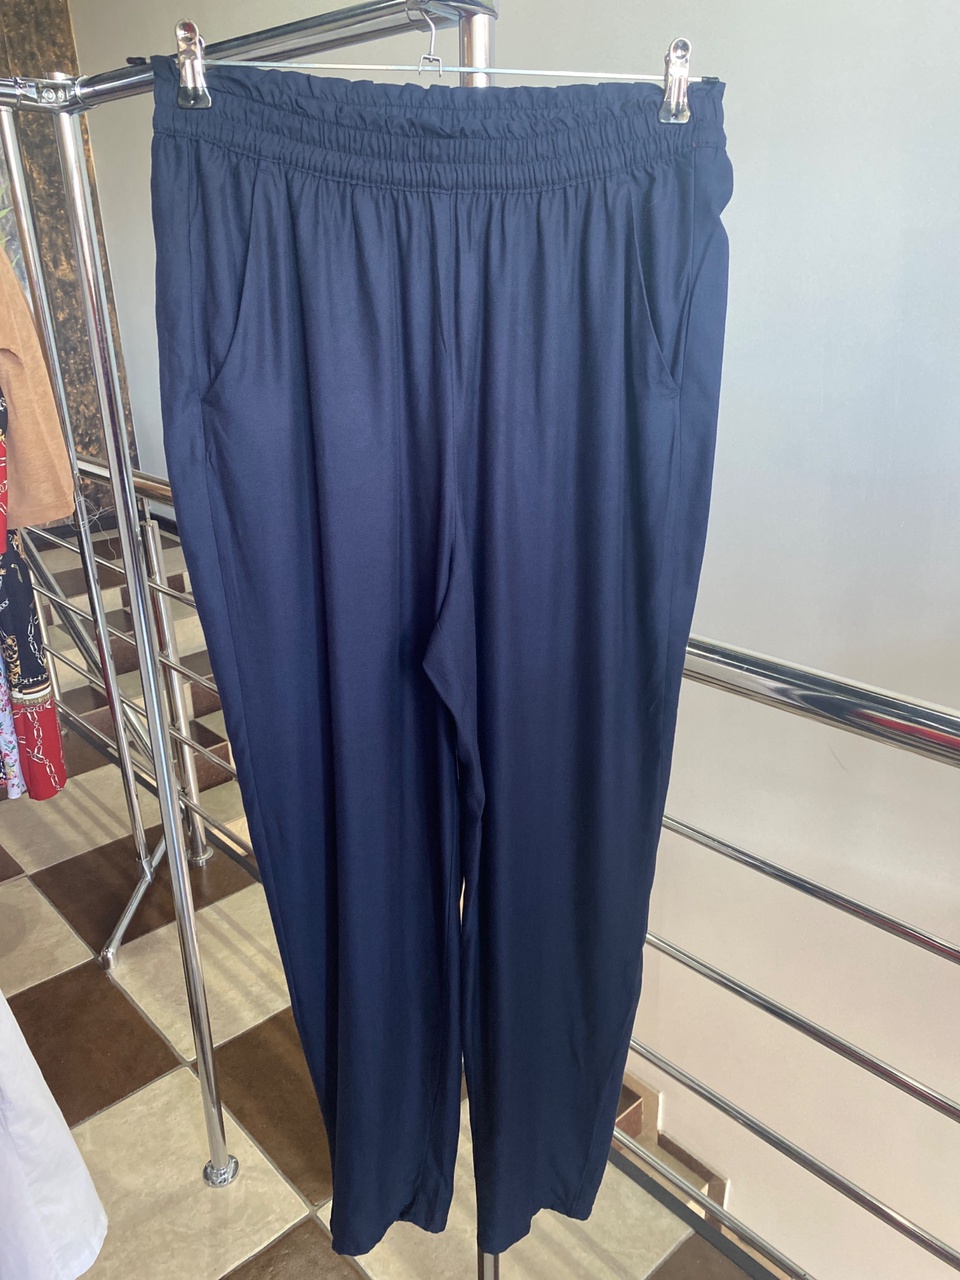 H&M брюки - 1 200 ₽, заказать онлайн.